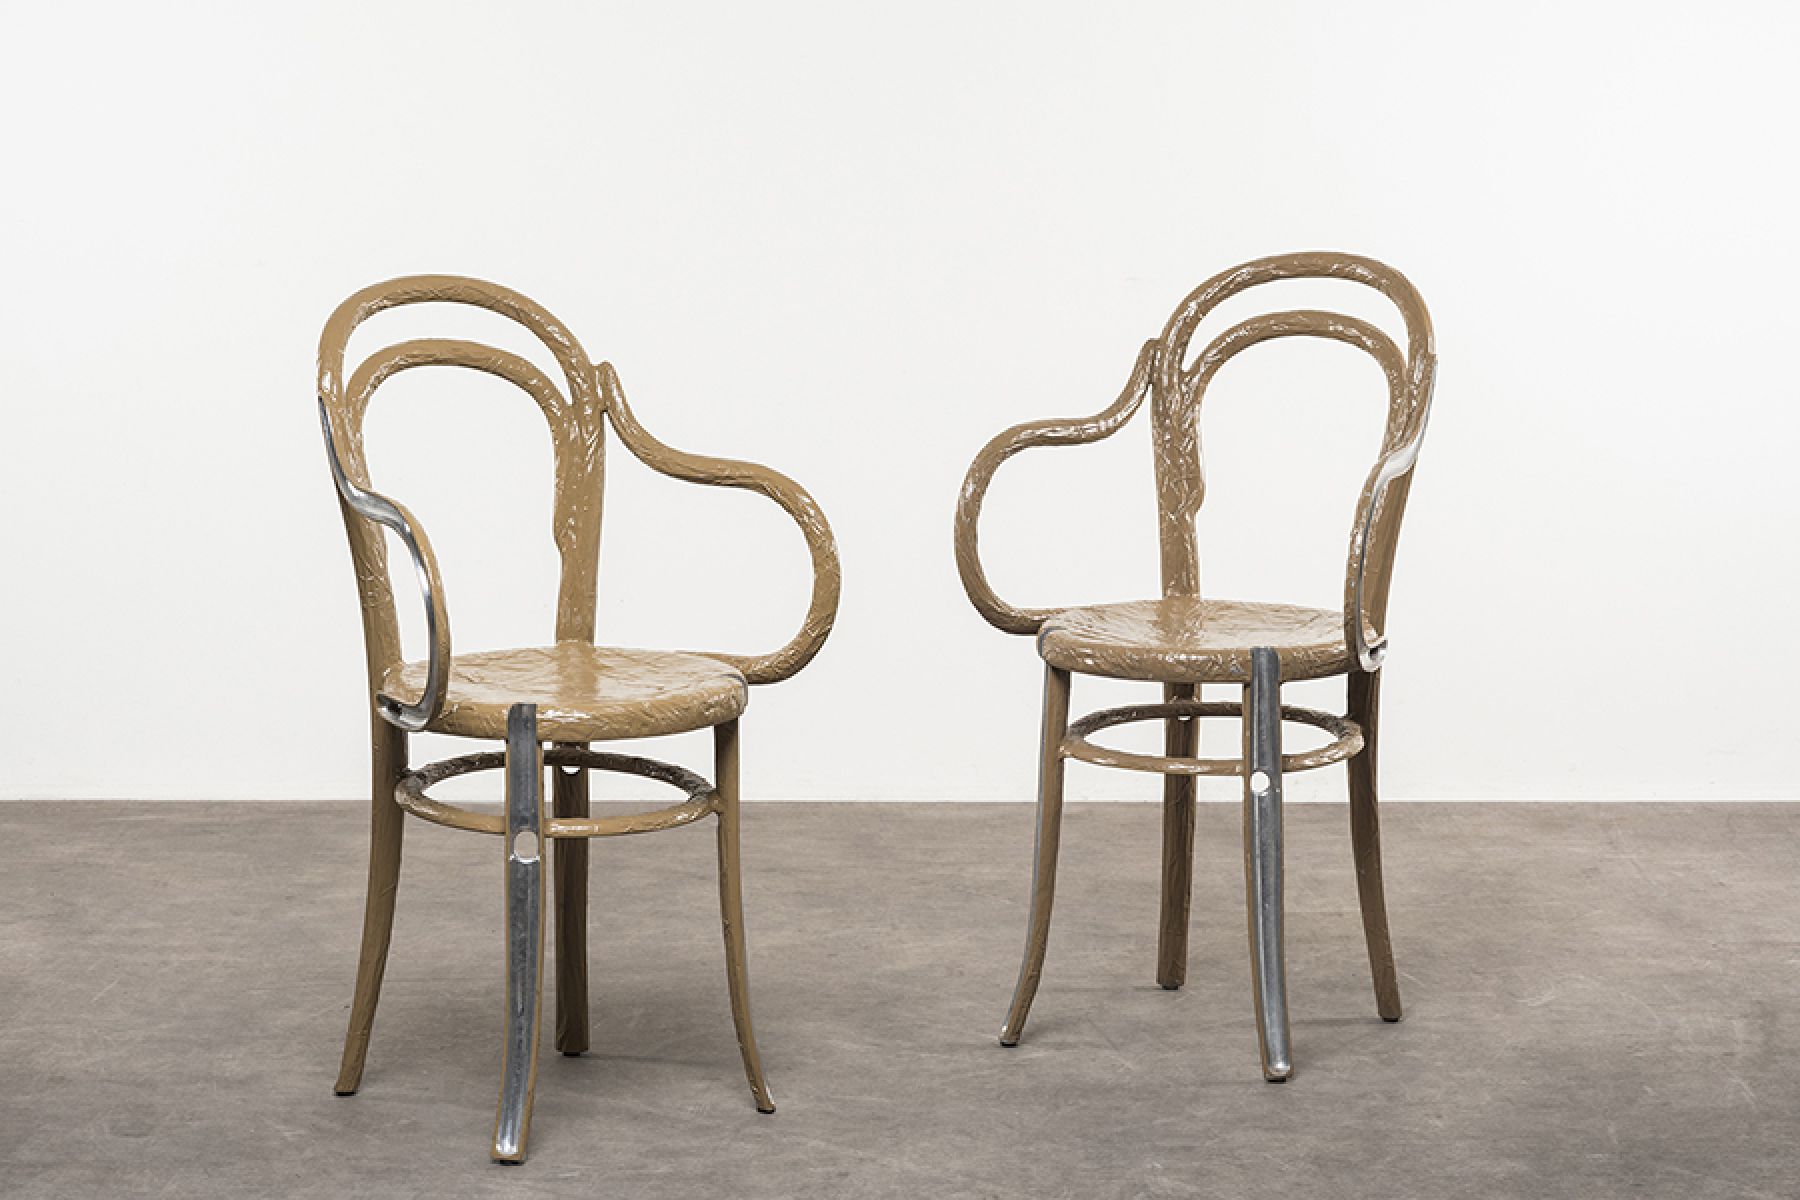 Chair Re Thonet 14 Andrea Salvetti pic-1